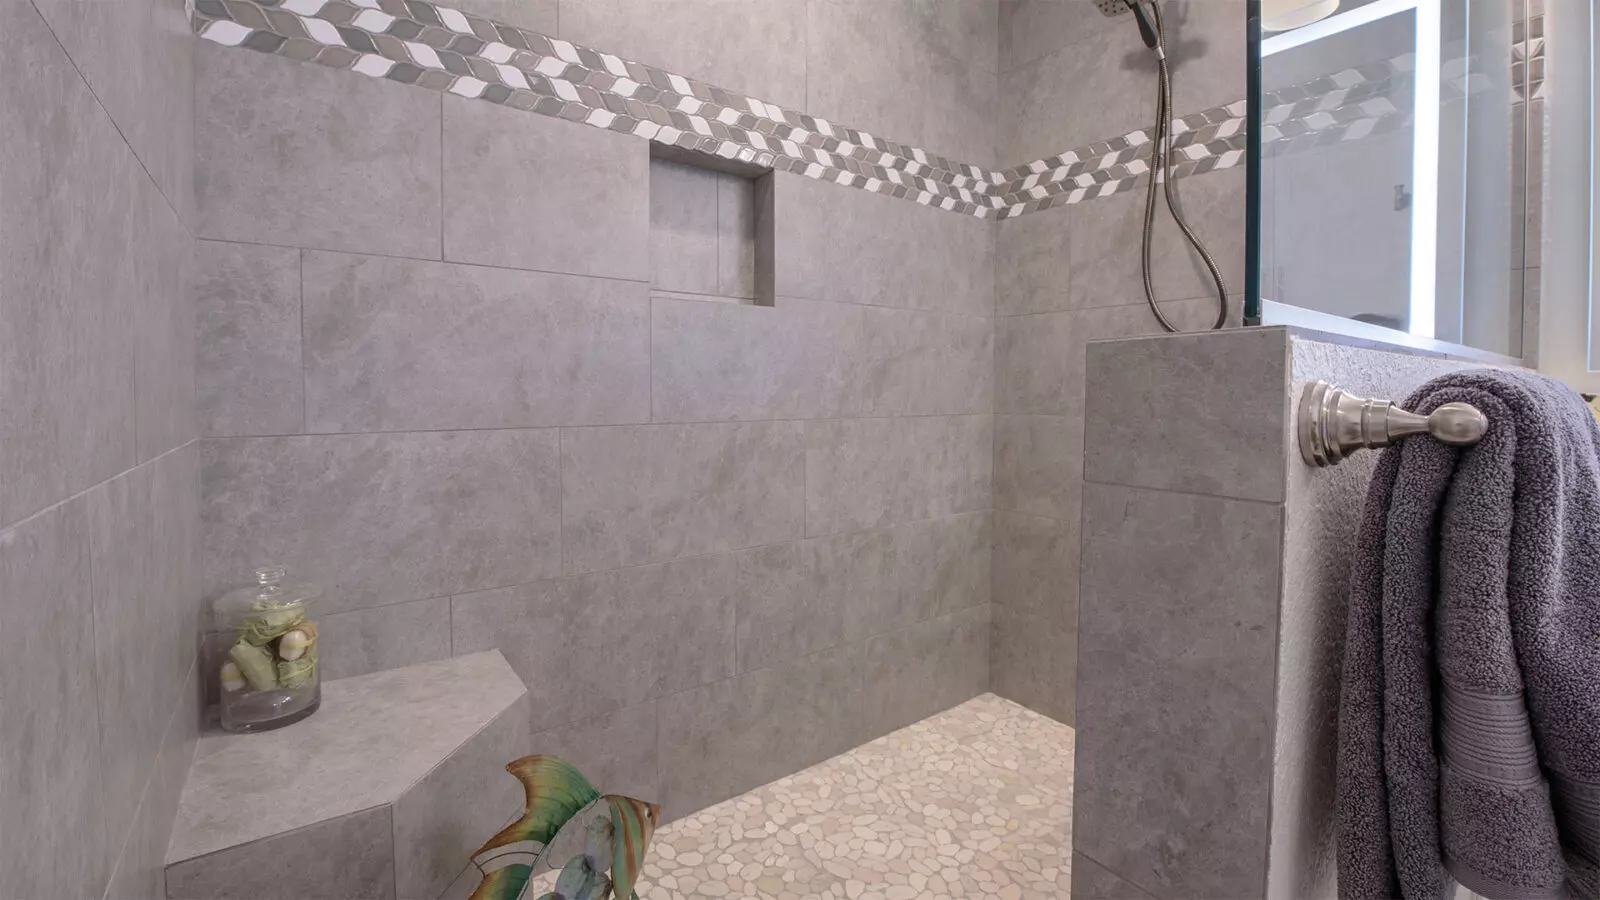 The inside of the shower room of a Scottsdale Shaker designed bathroom